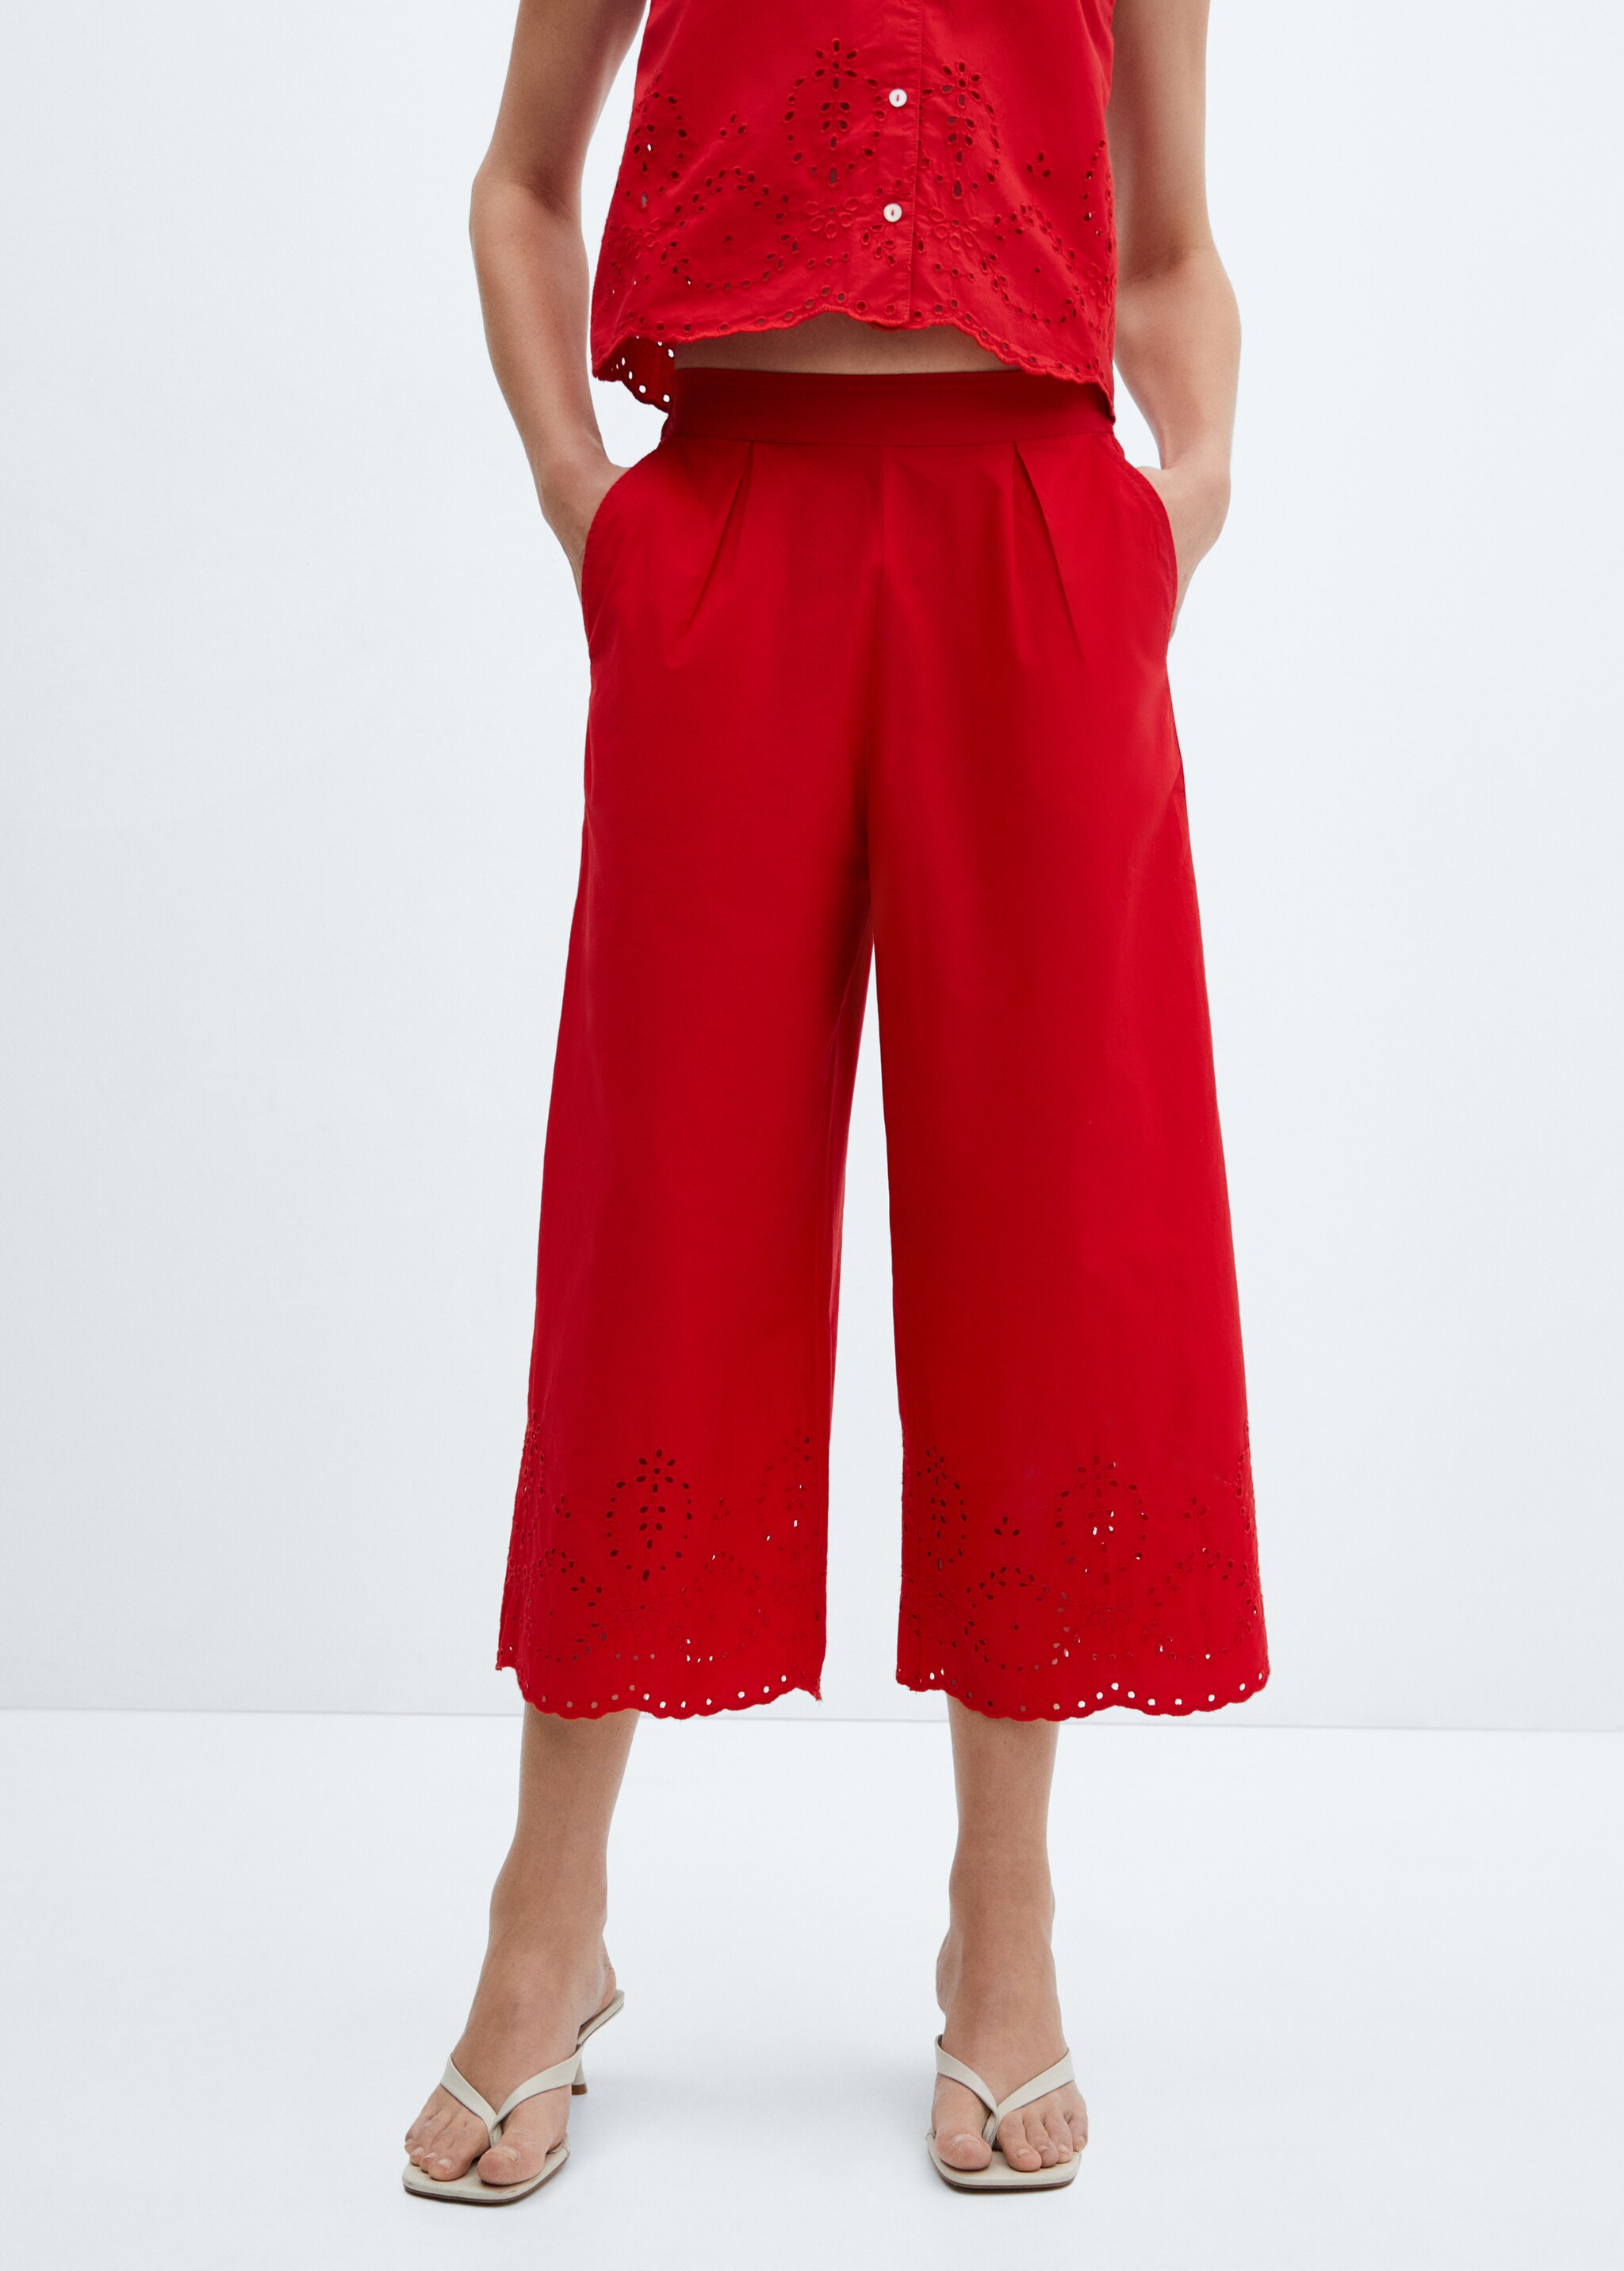 Embroidered culotte pants - Medium plane